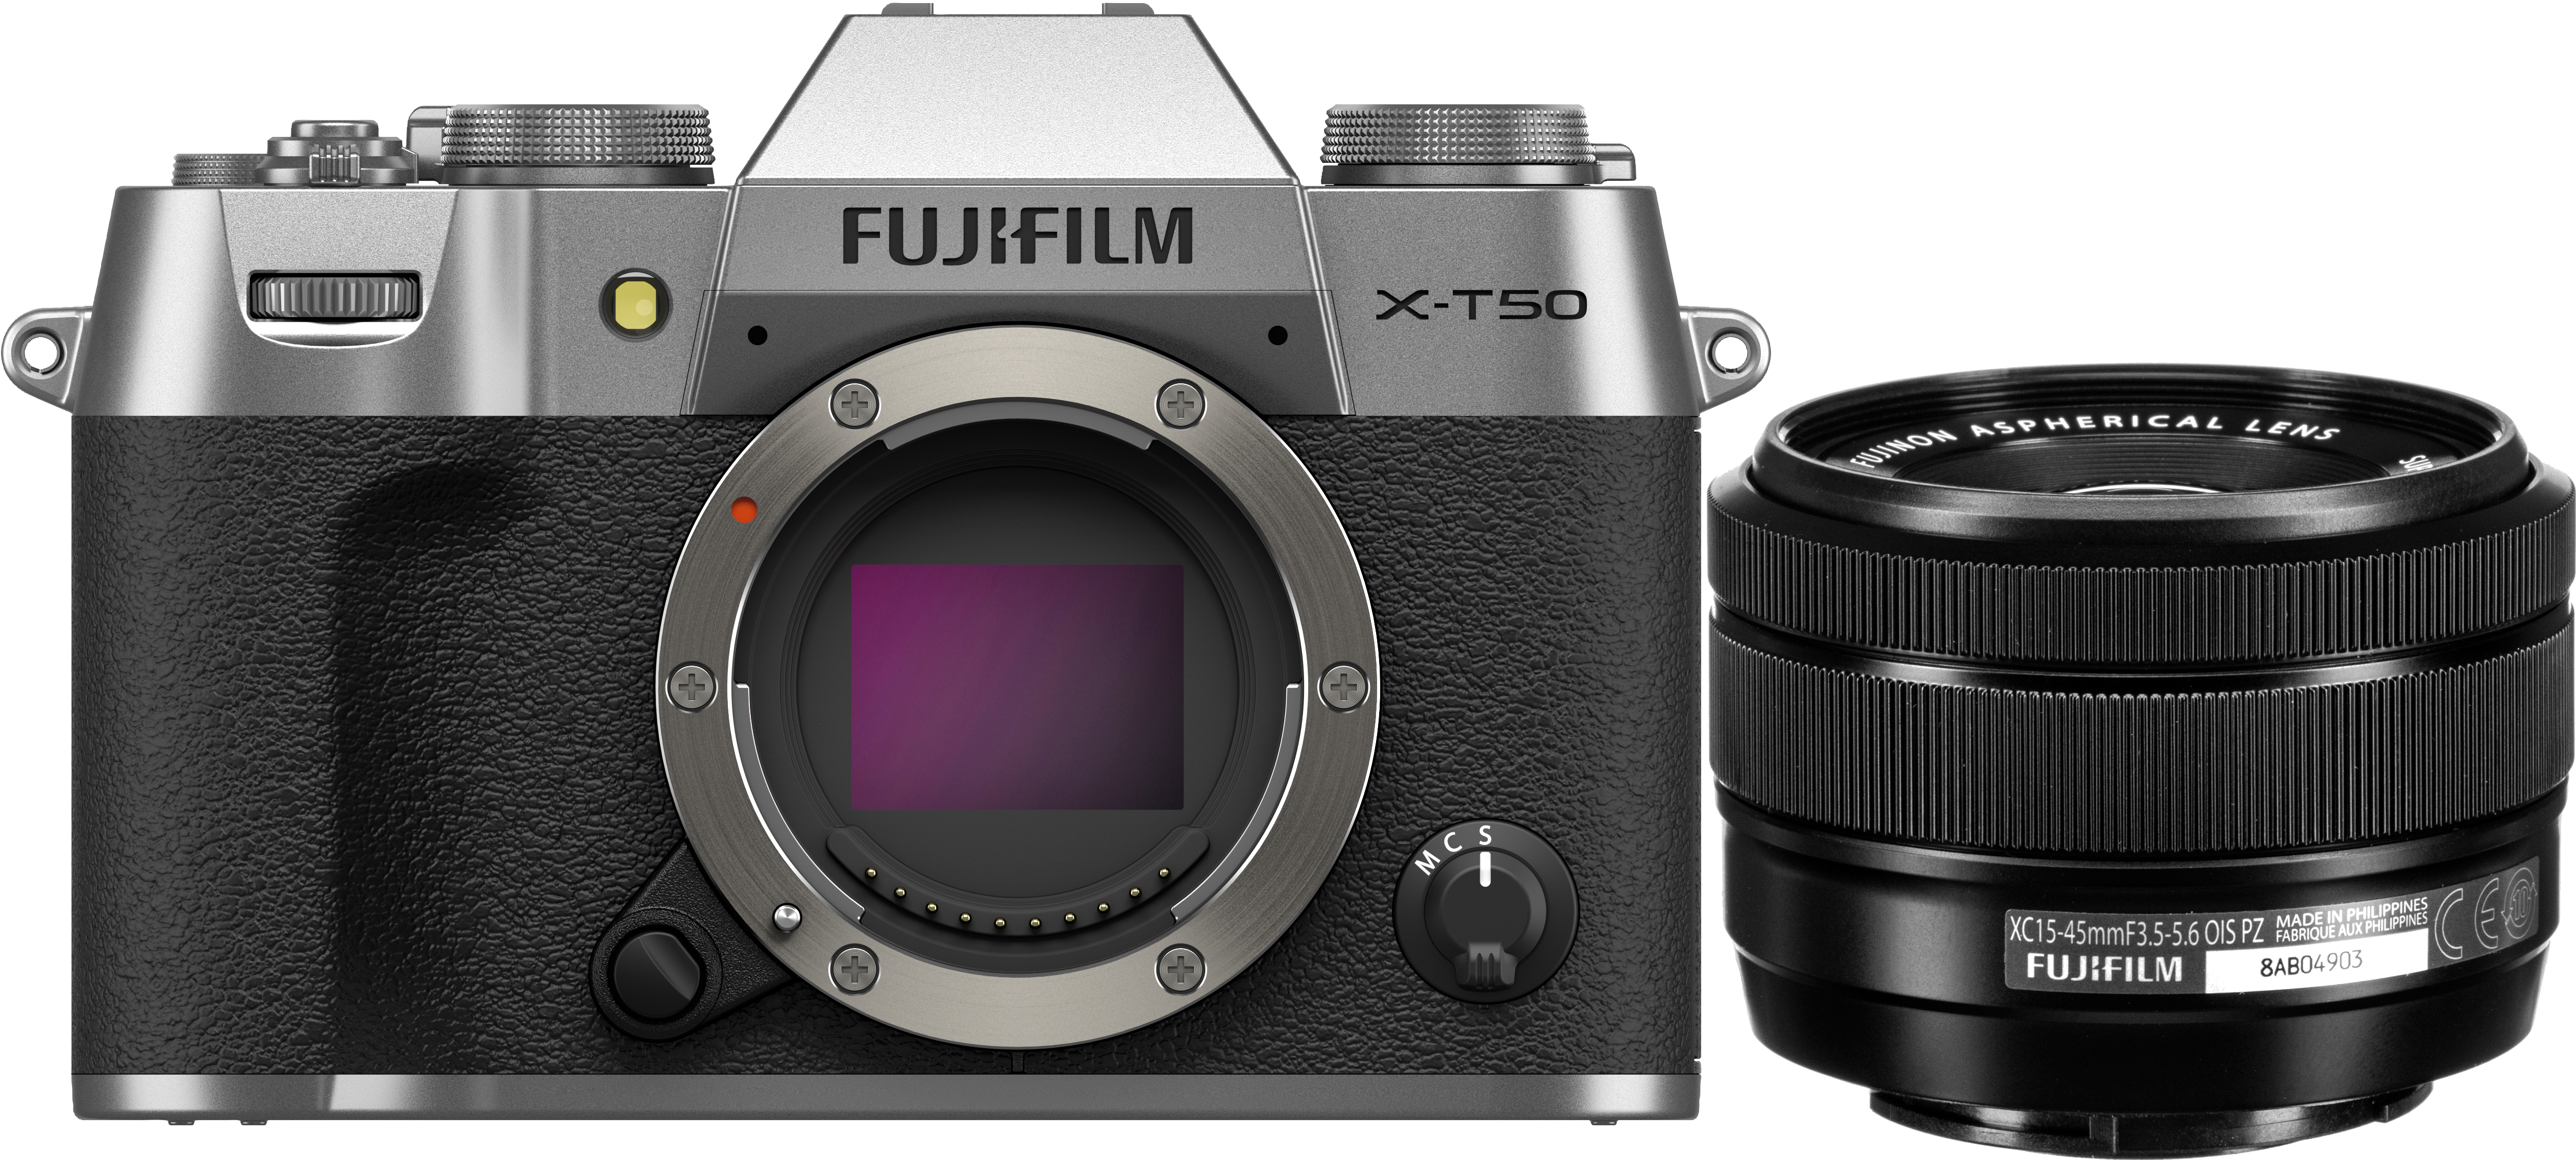 Fujifilm X-T50 Mirrorless Camera with 15-45mm f/3.5-5.6 Lens (Silver)